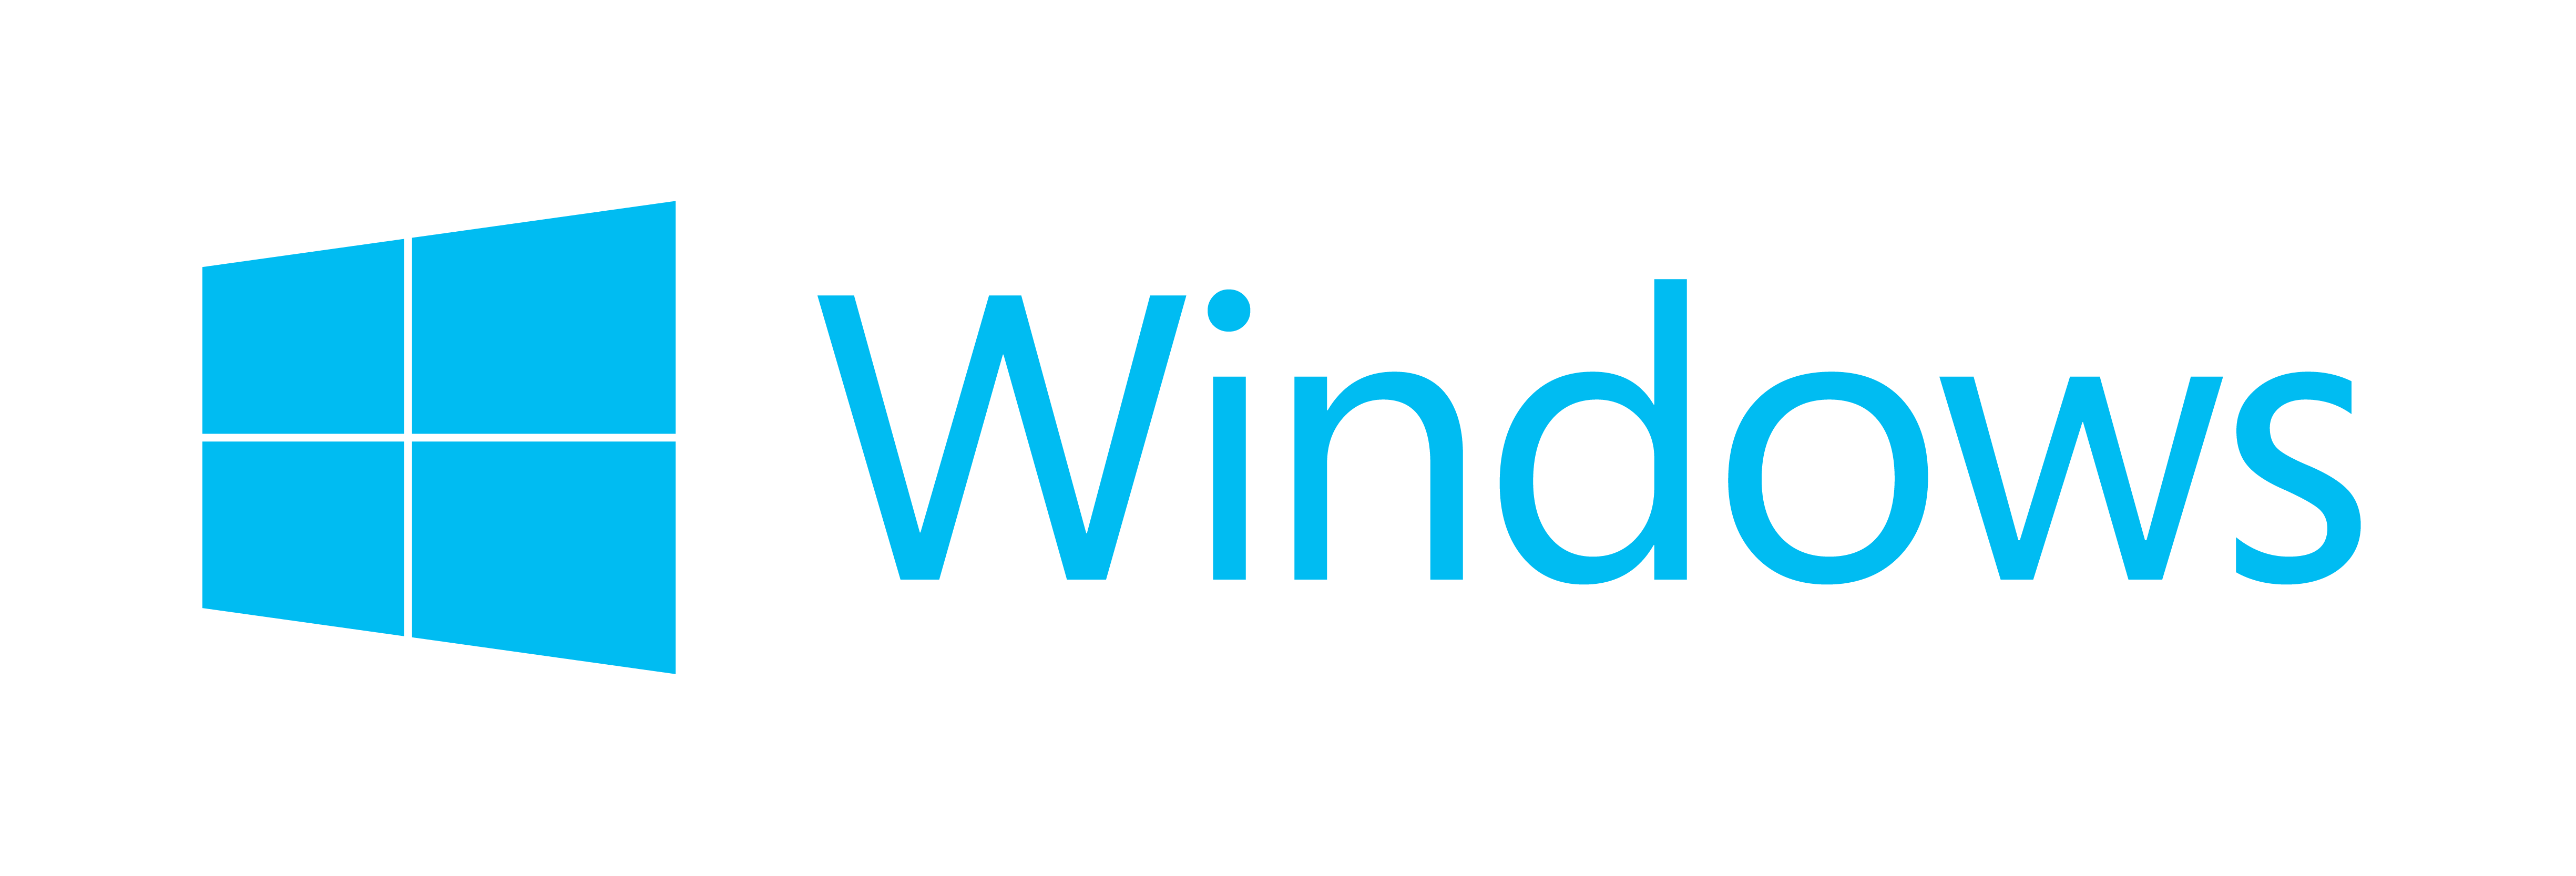 Windows logo 4900x1667